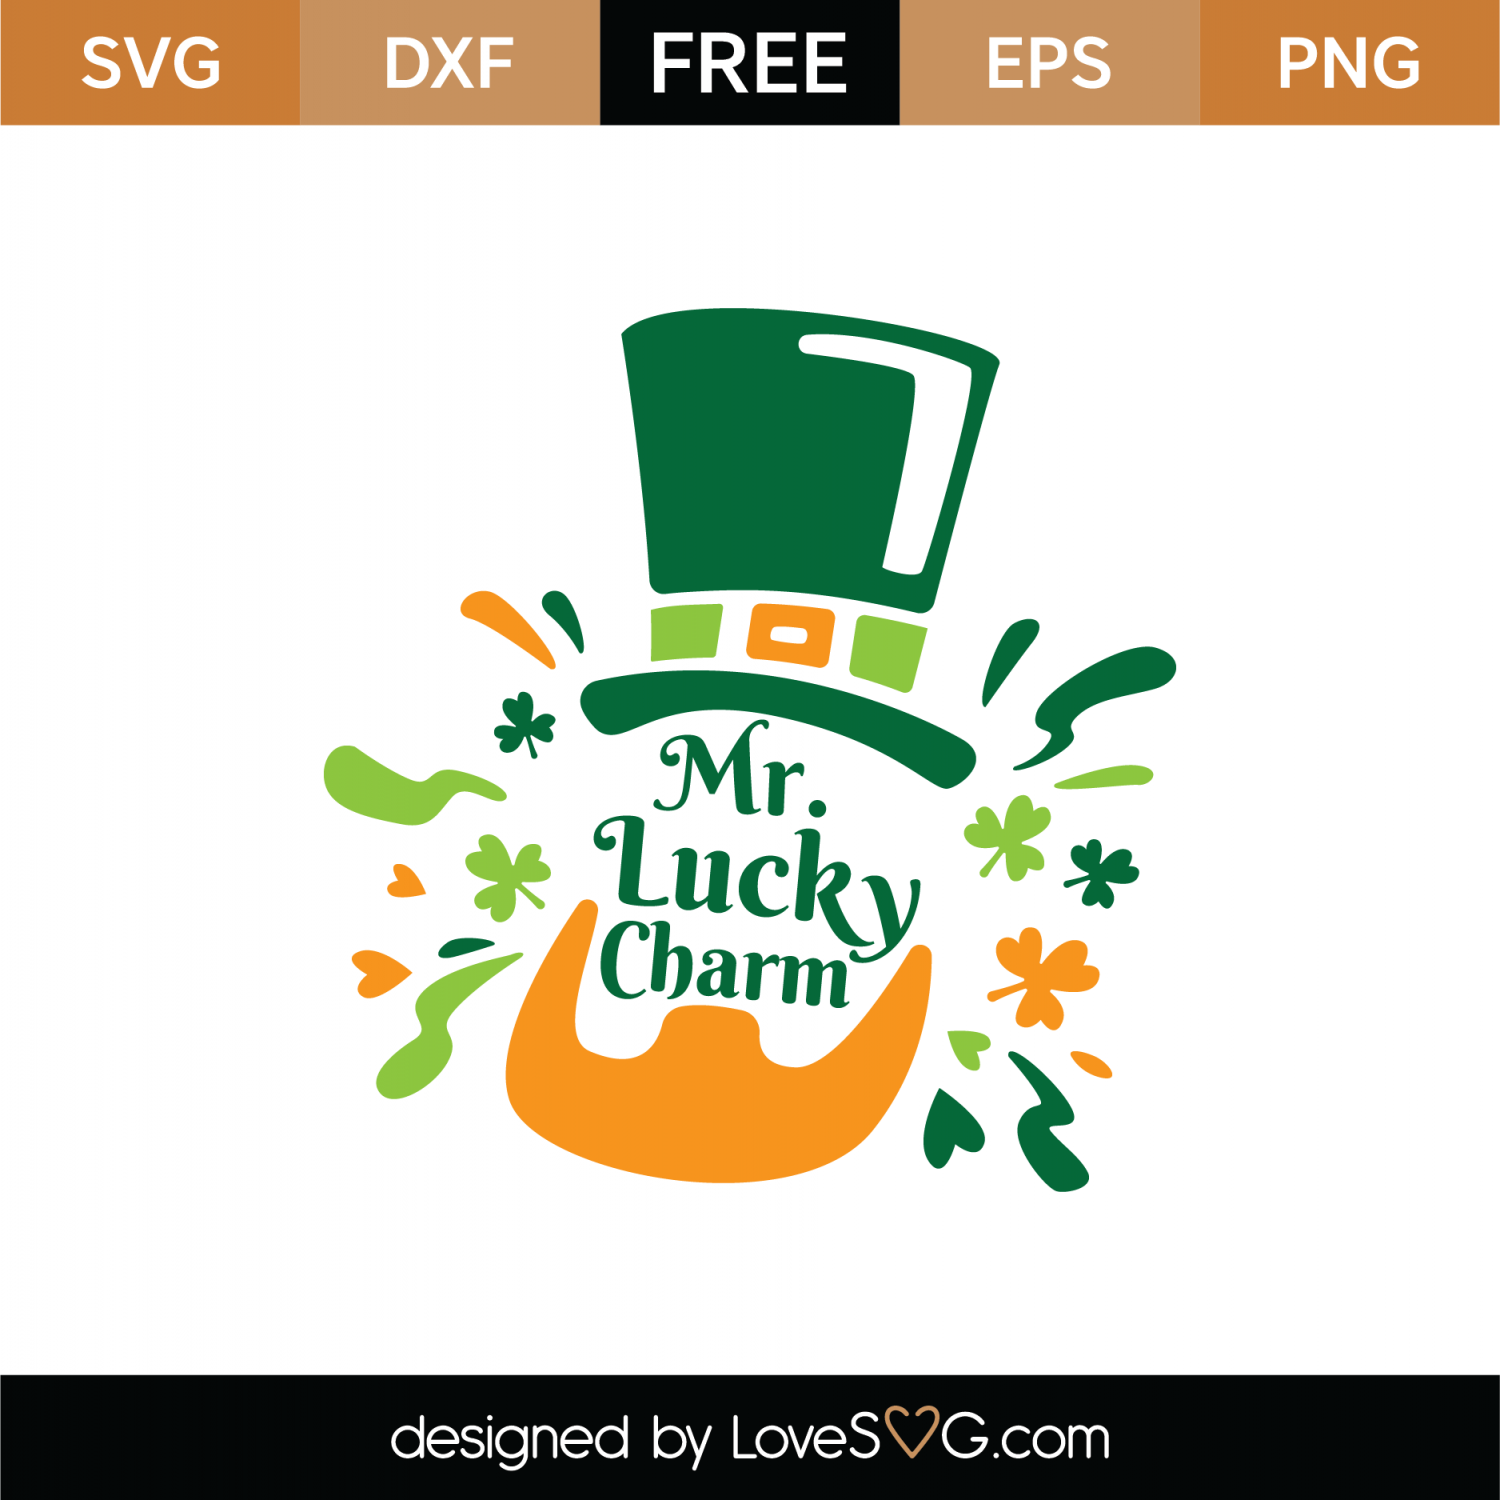 Download Free Mr Lucky Charm SVG Cut File | Lovesvg.com